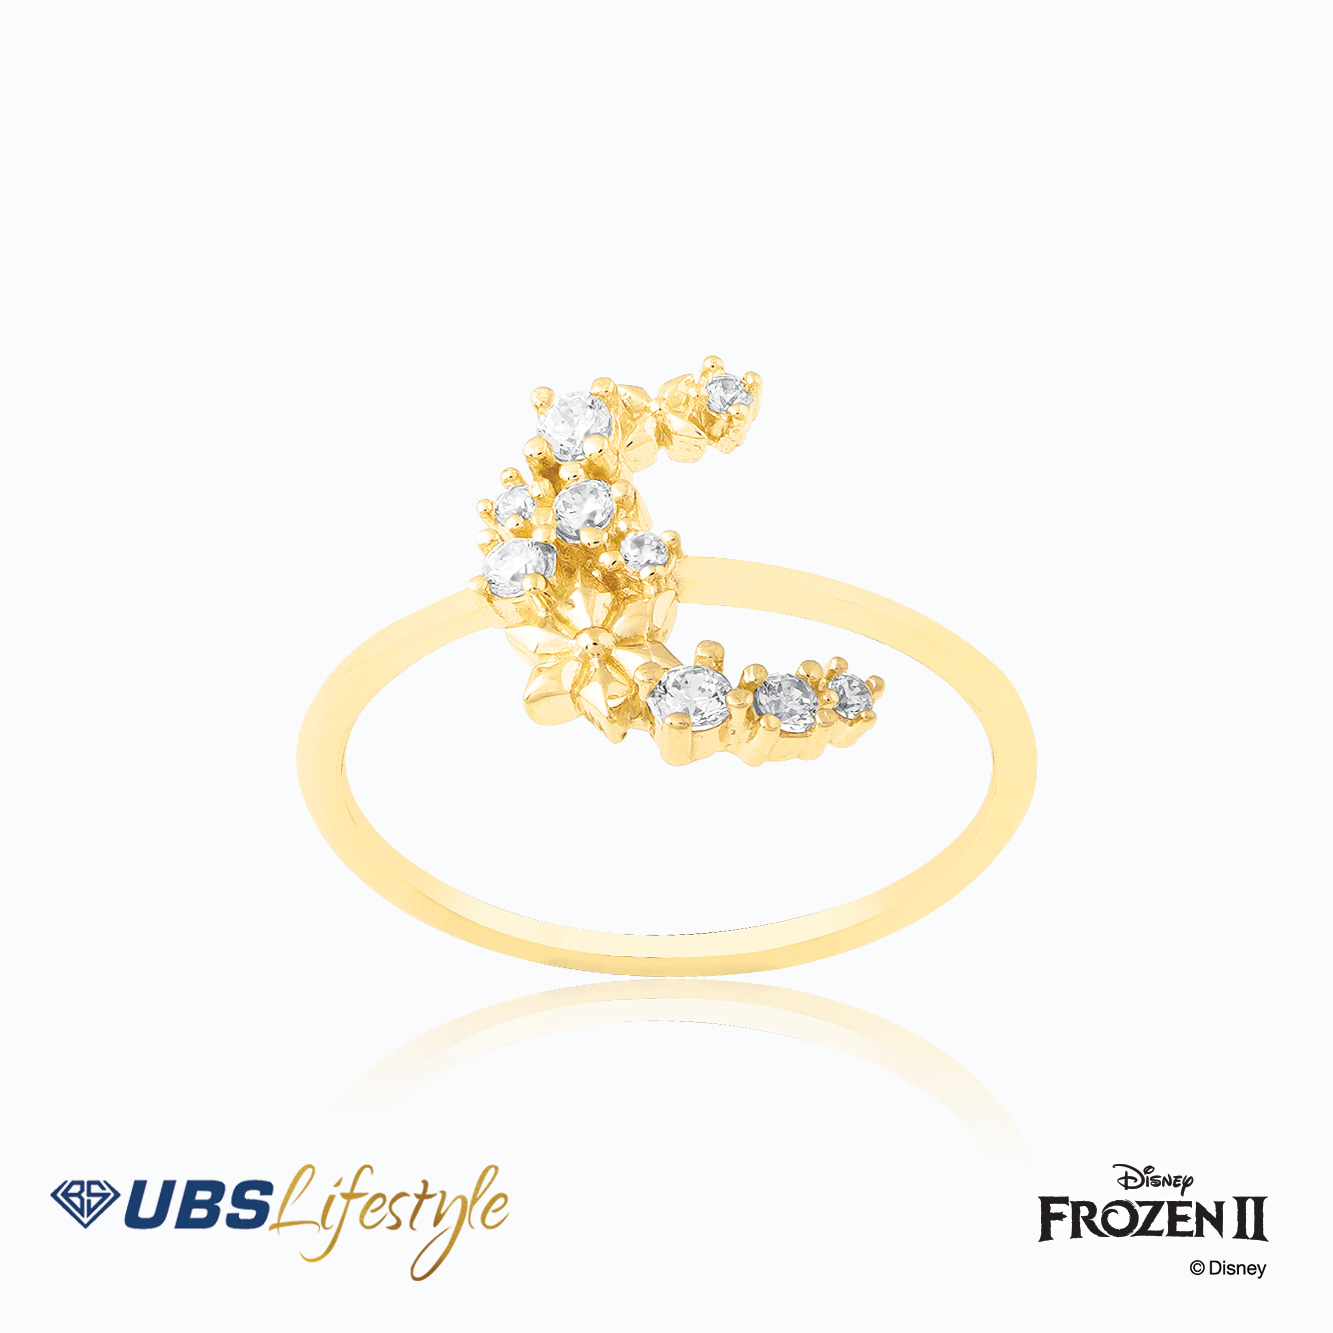 UBS Cincin Emas Disney Frozen - Ccy0159Y - 17K